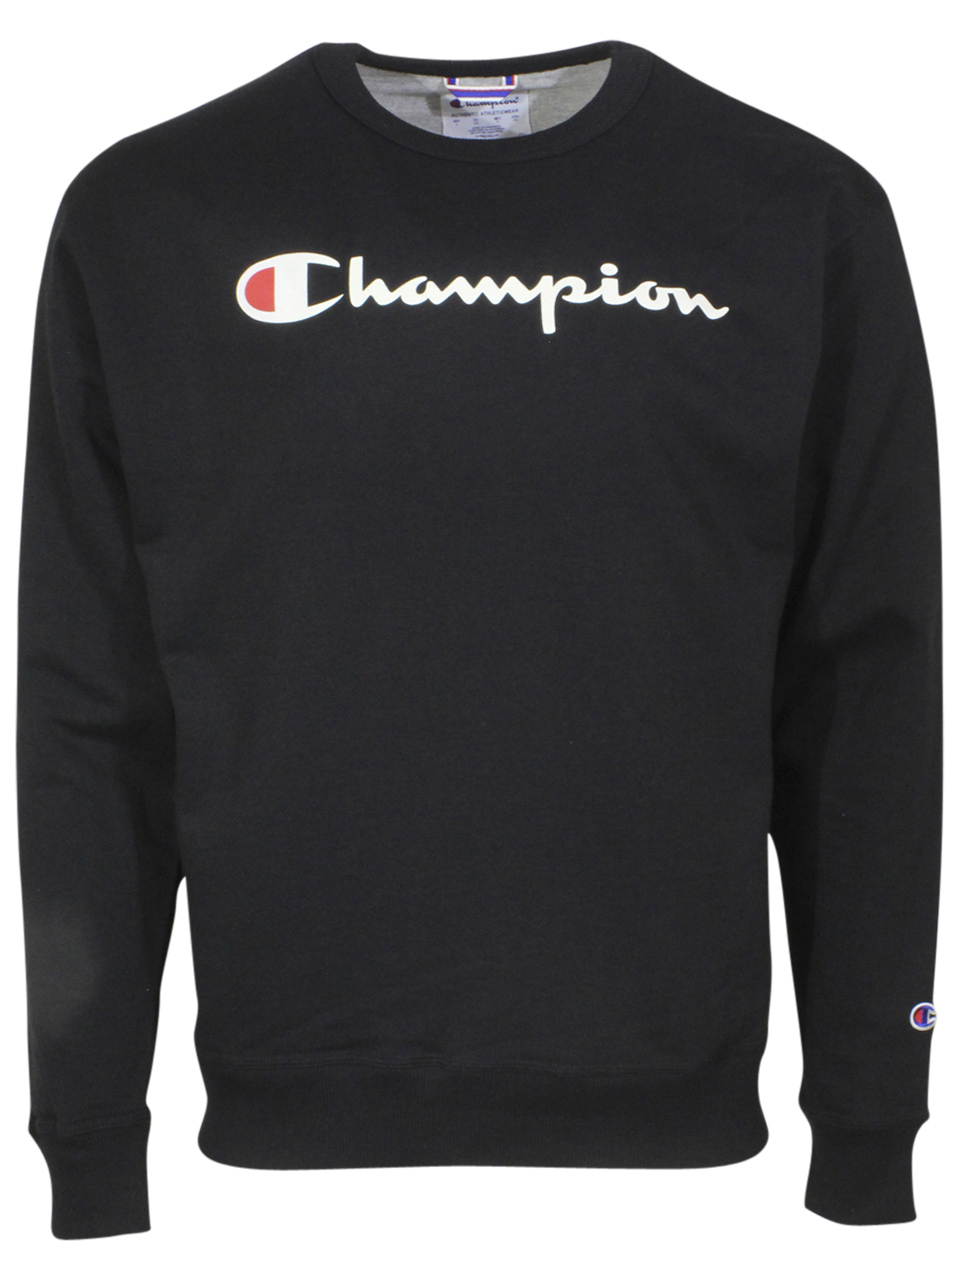 champion long sleeve sweater